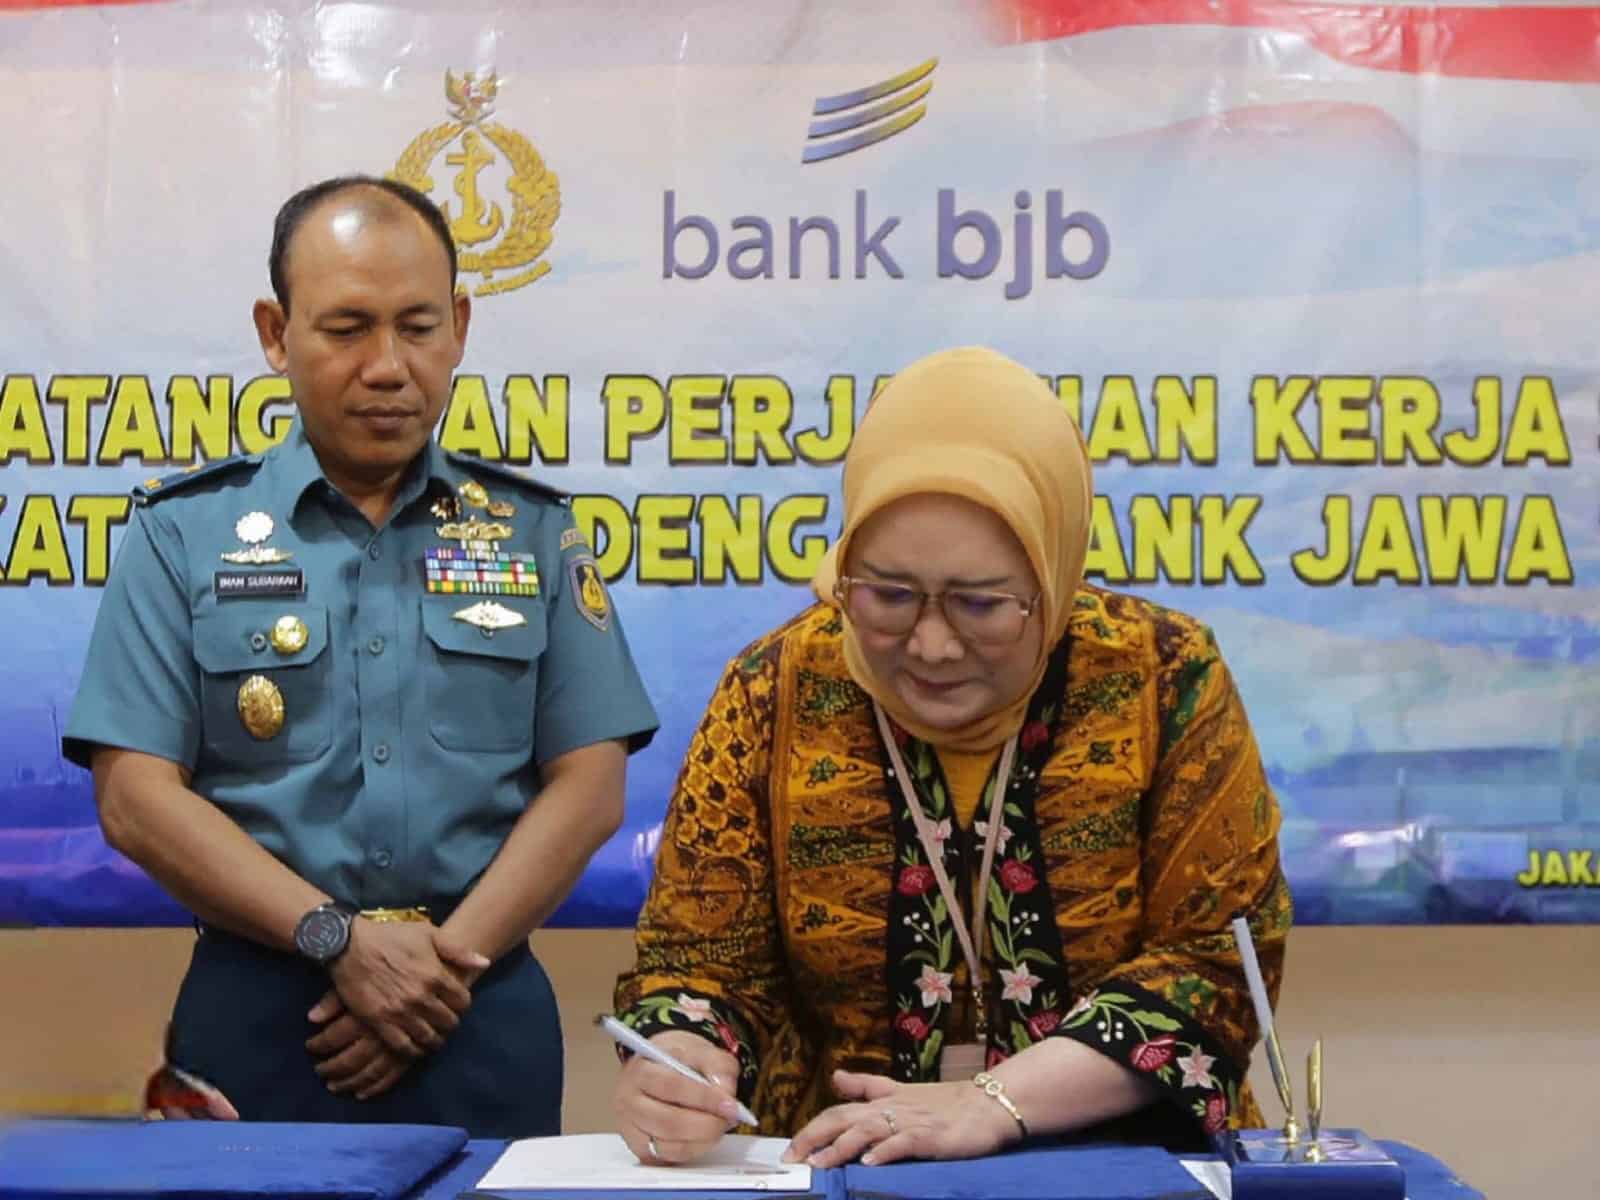 Penandatanganan PKS antara bank bjb bersama TNI AL. (Foto: bank bjb)